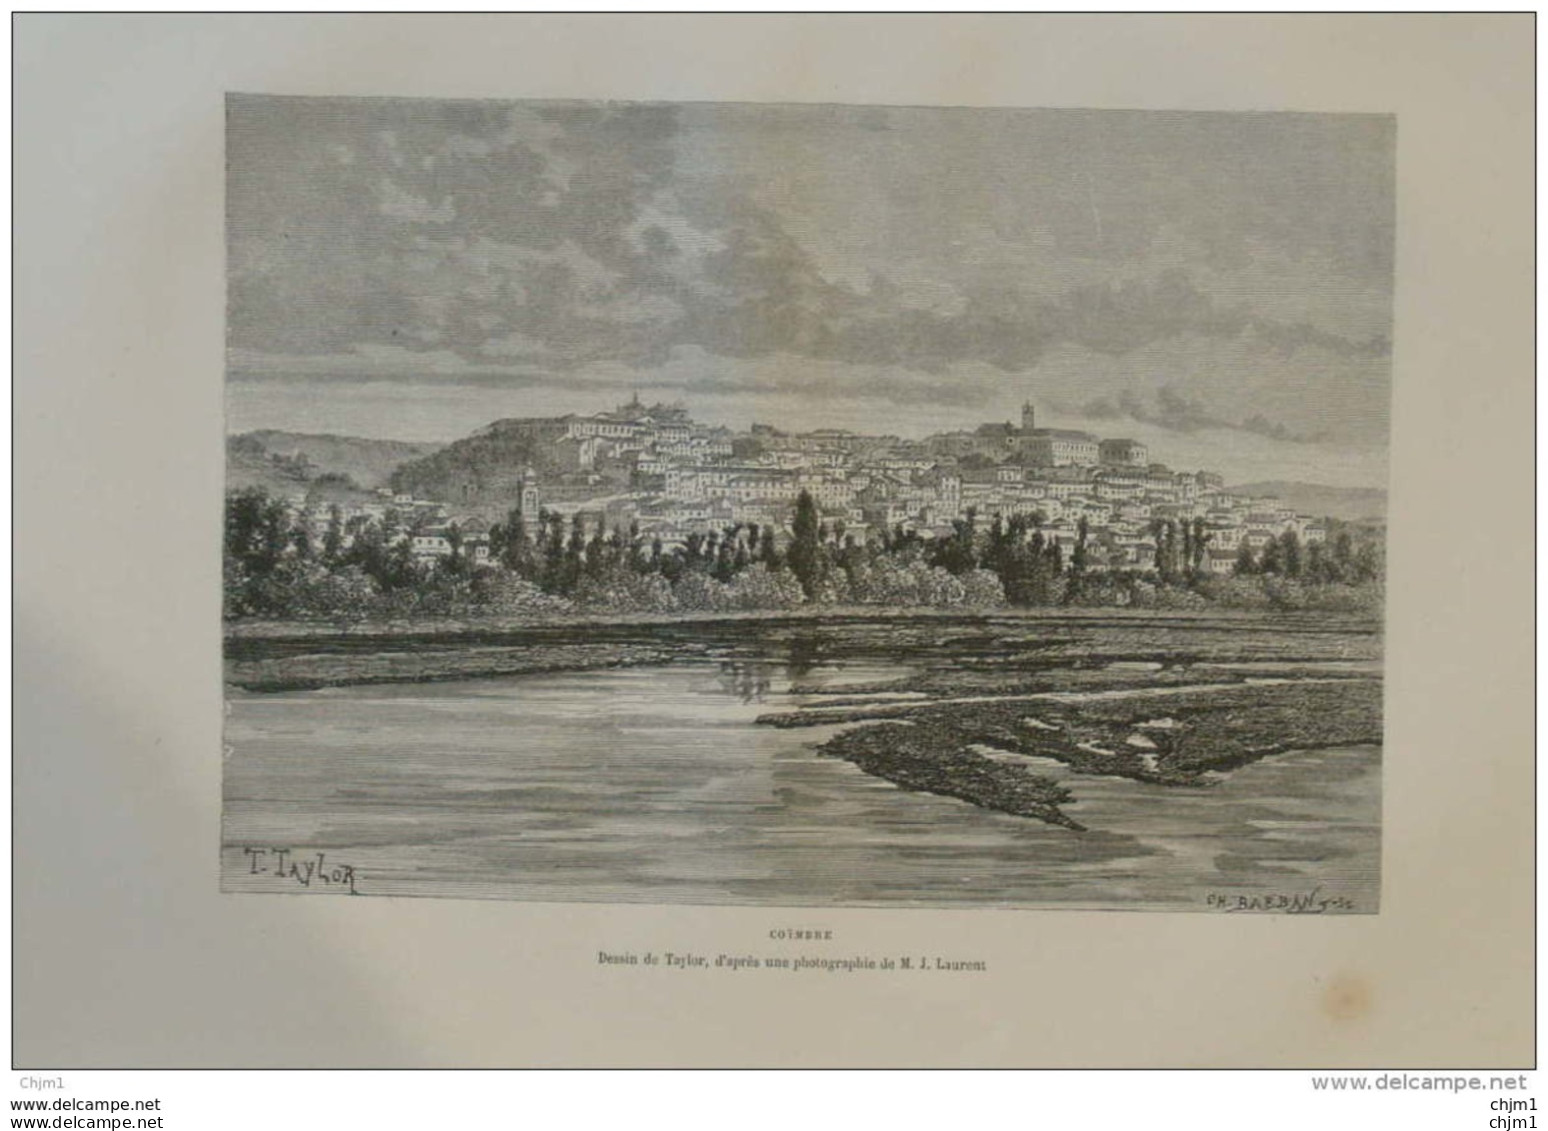 Coimbre - Page Original 1876 - Historische Dokumente